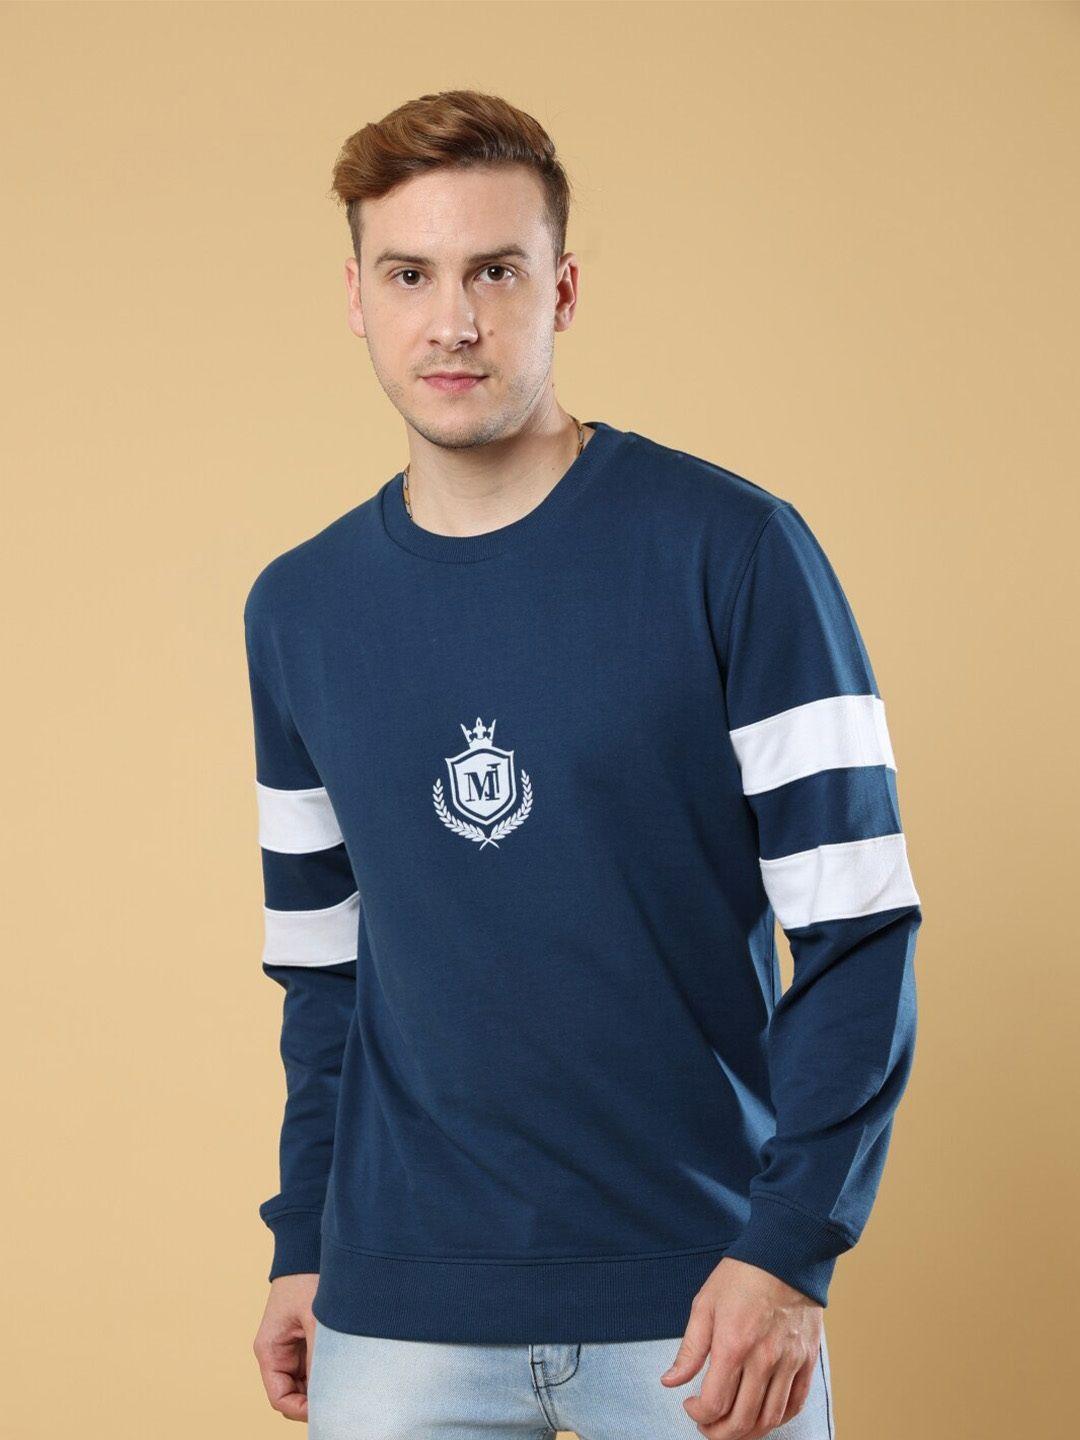 melvin-jones-graphic-printed-pullover-pure-cotton-sweatshirt